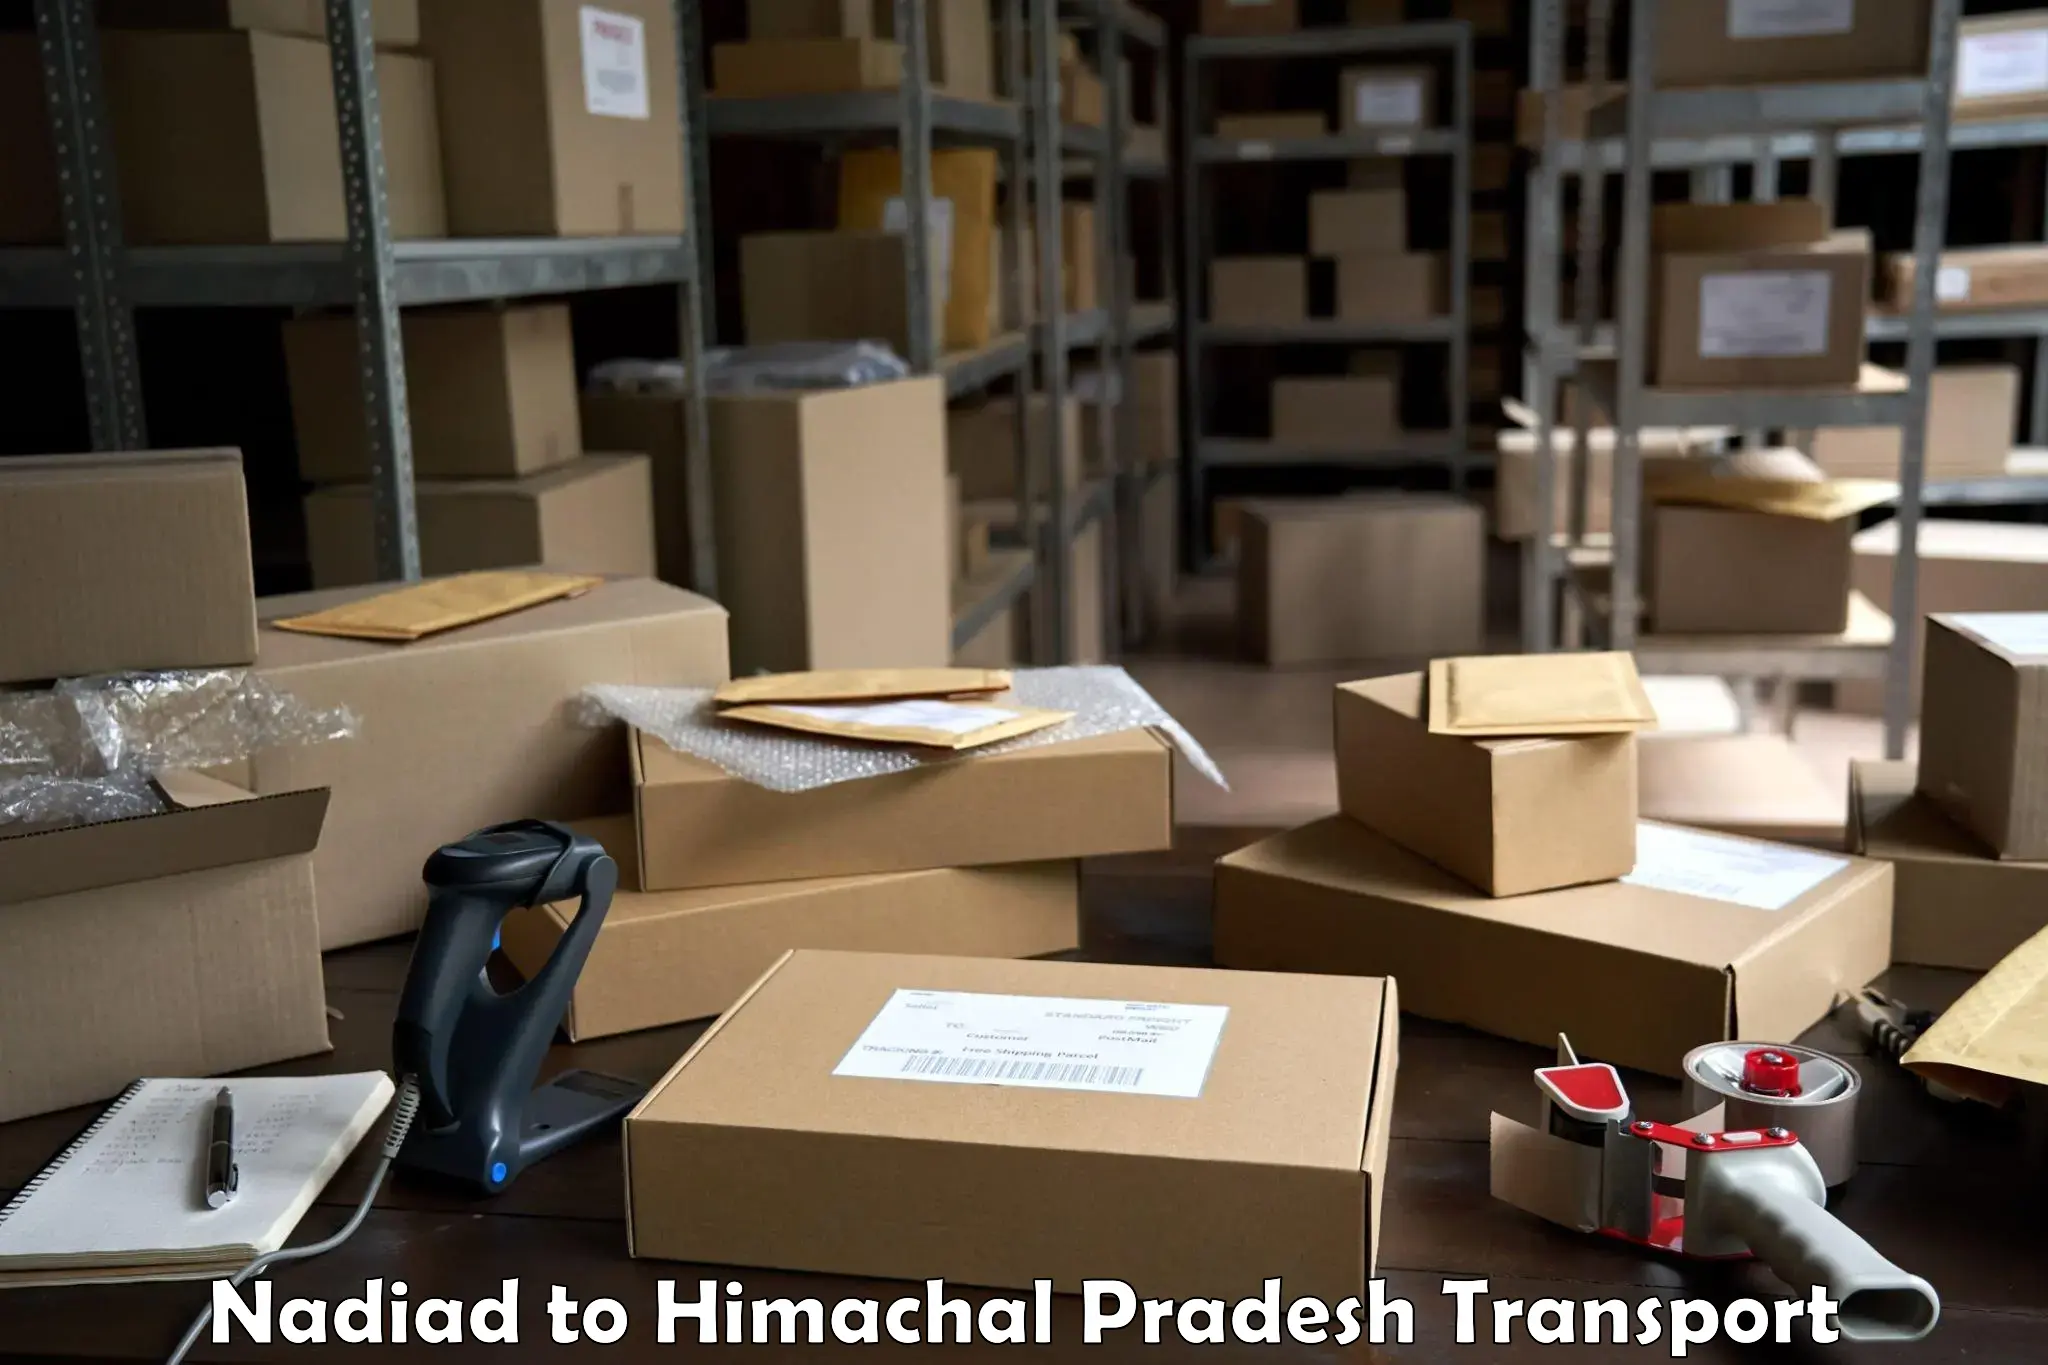 Truck transport companies in India Nadiad to Himachal Pradesh